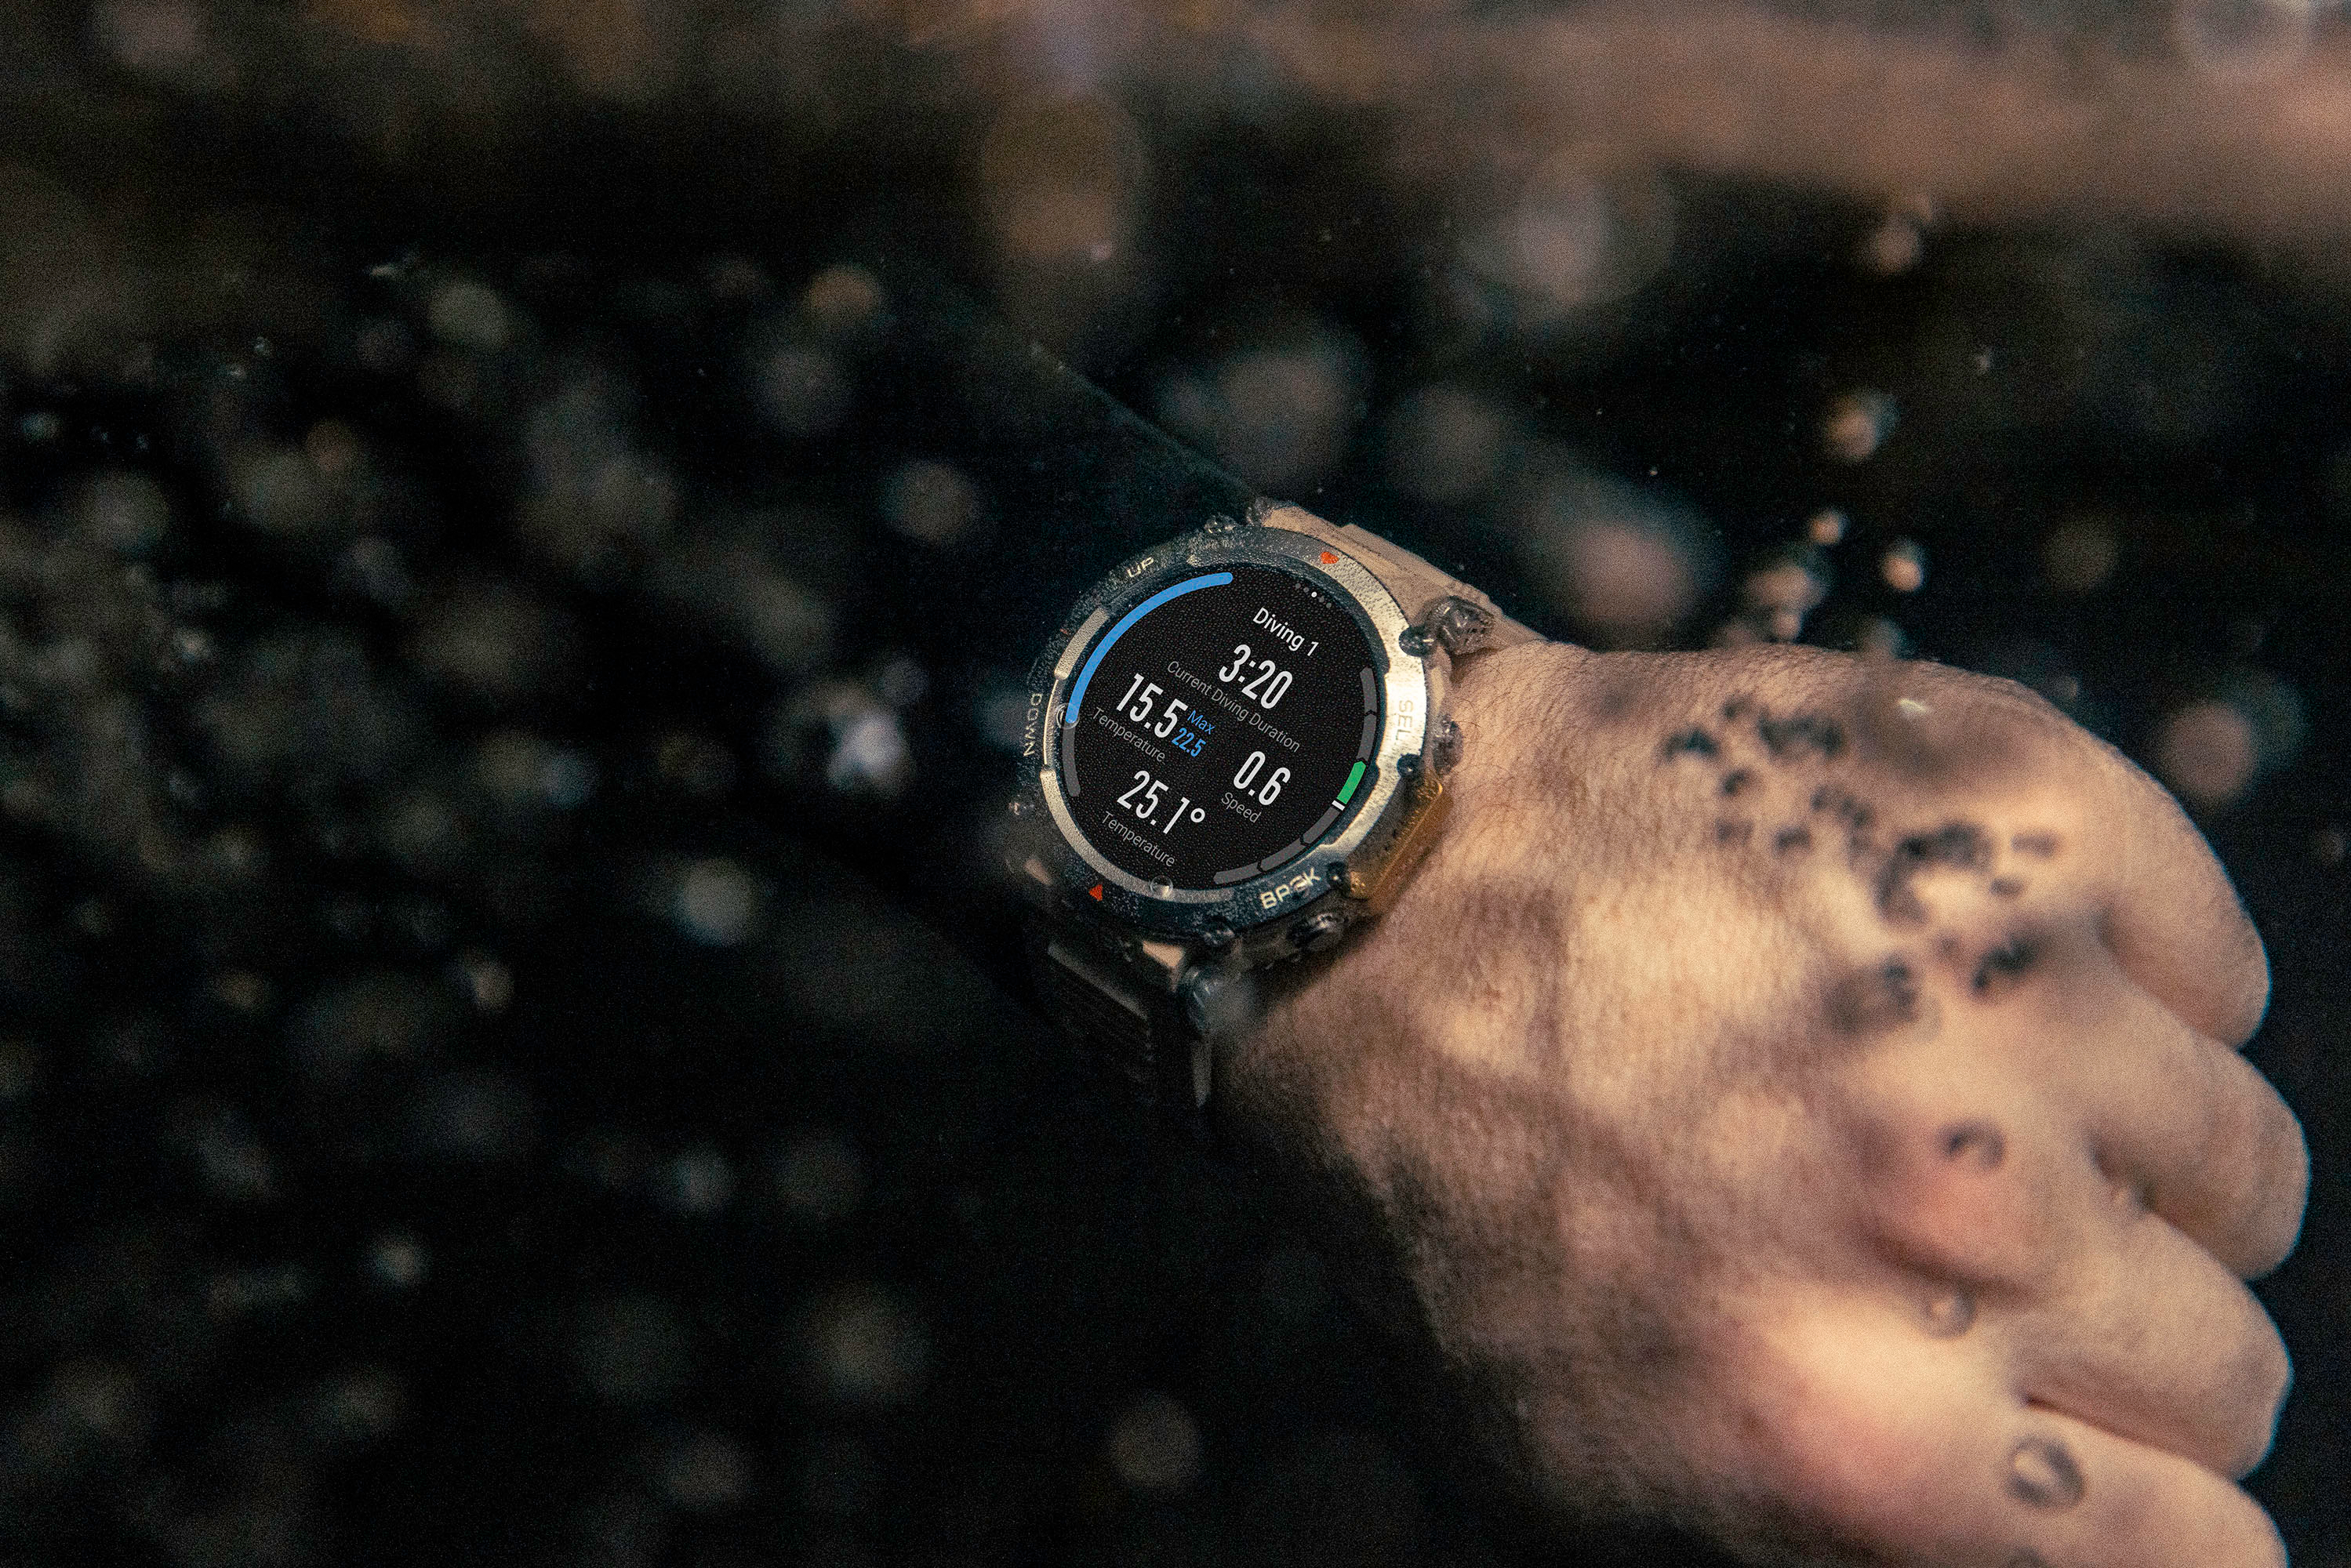  Amazfit T-Rex Ultra Smart Watch for Men, 20-Day